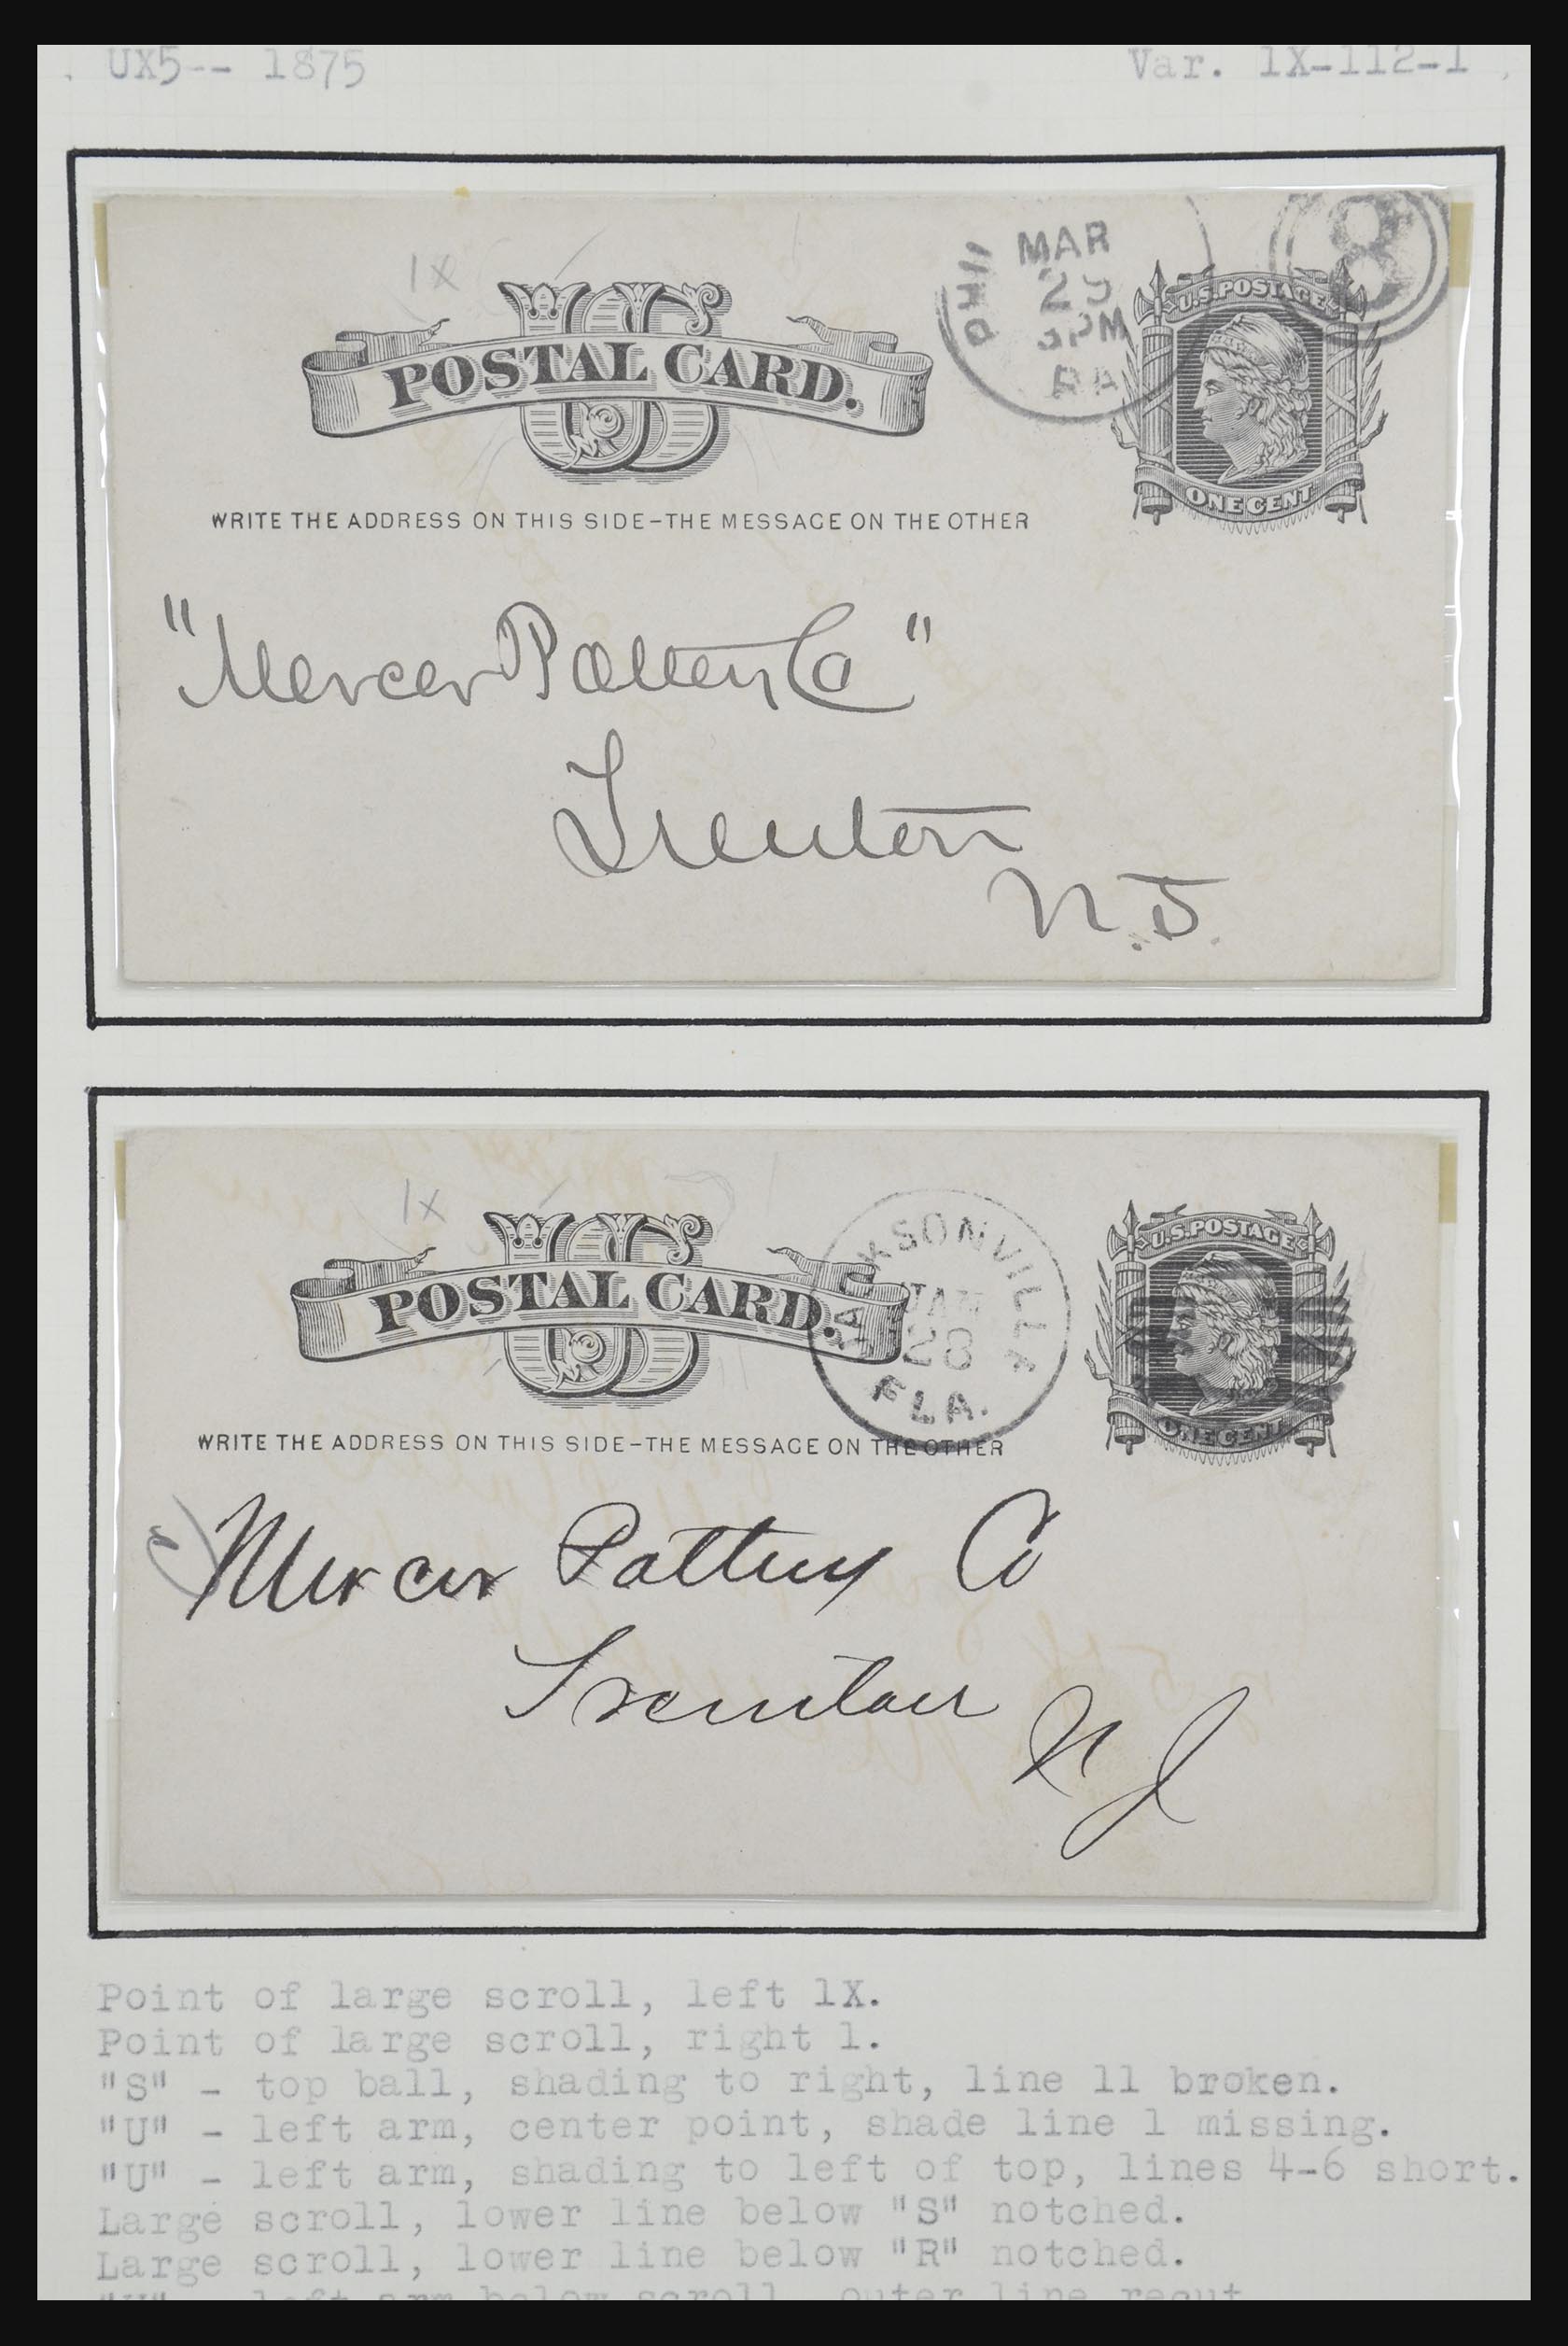 32209 077 - 32209 USA postal cards 1873-1950.